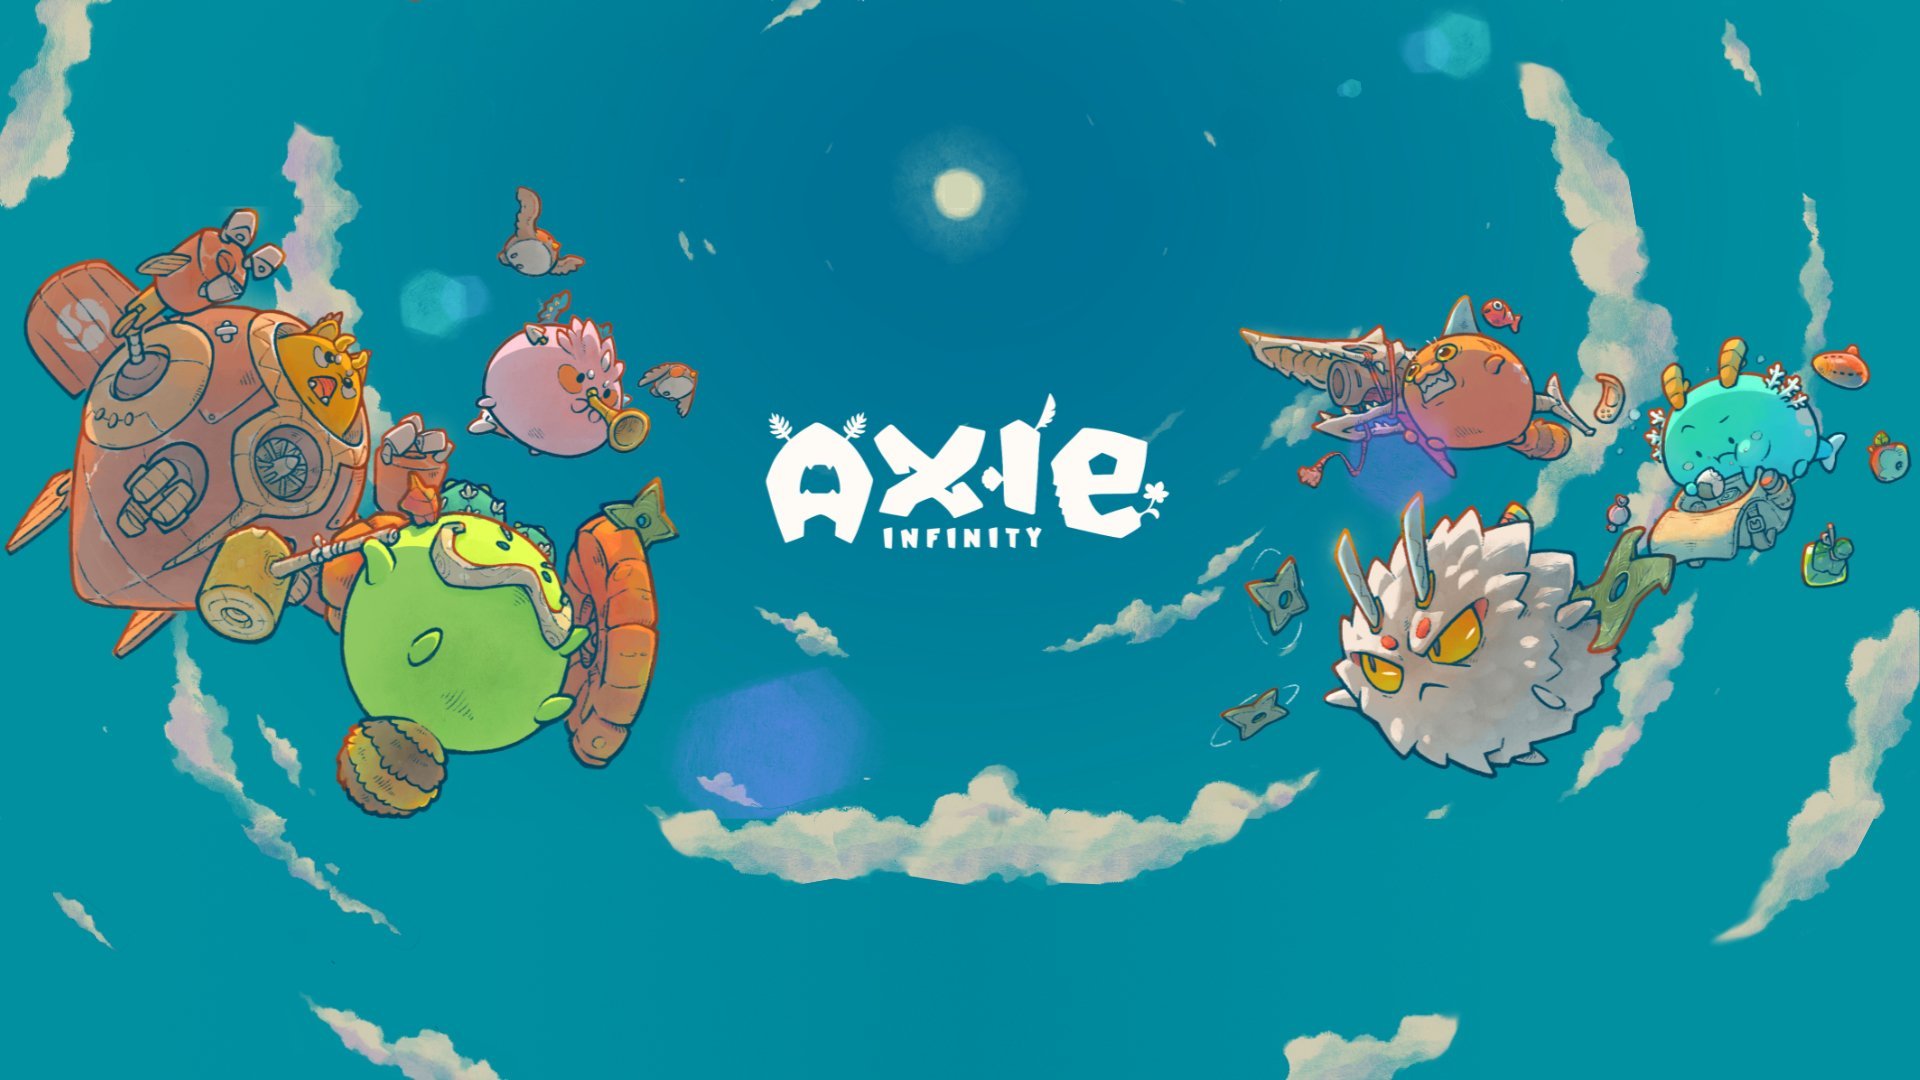 Axie Infinity: Infinite Opportunity or Infinite Peril?